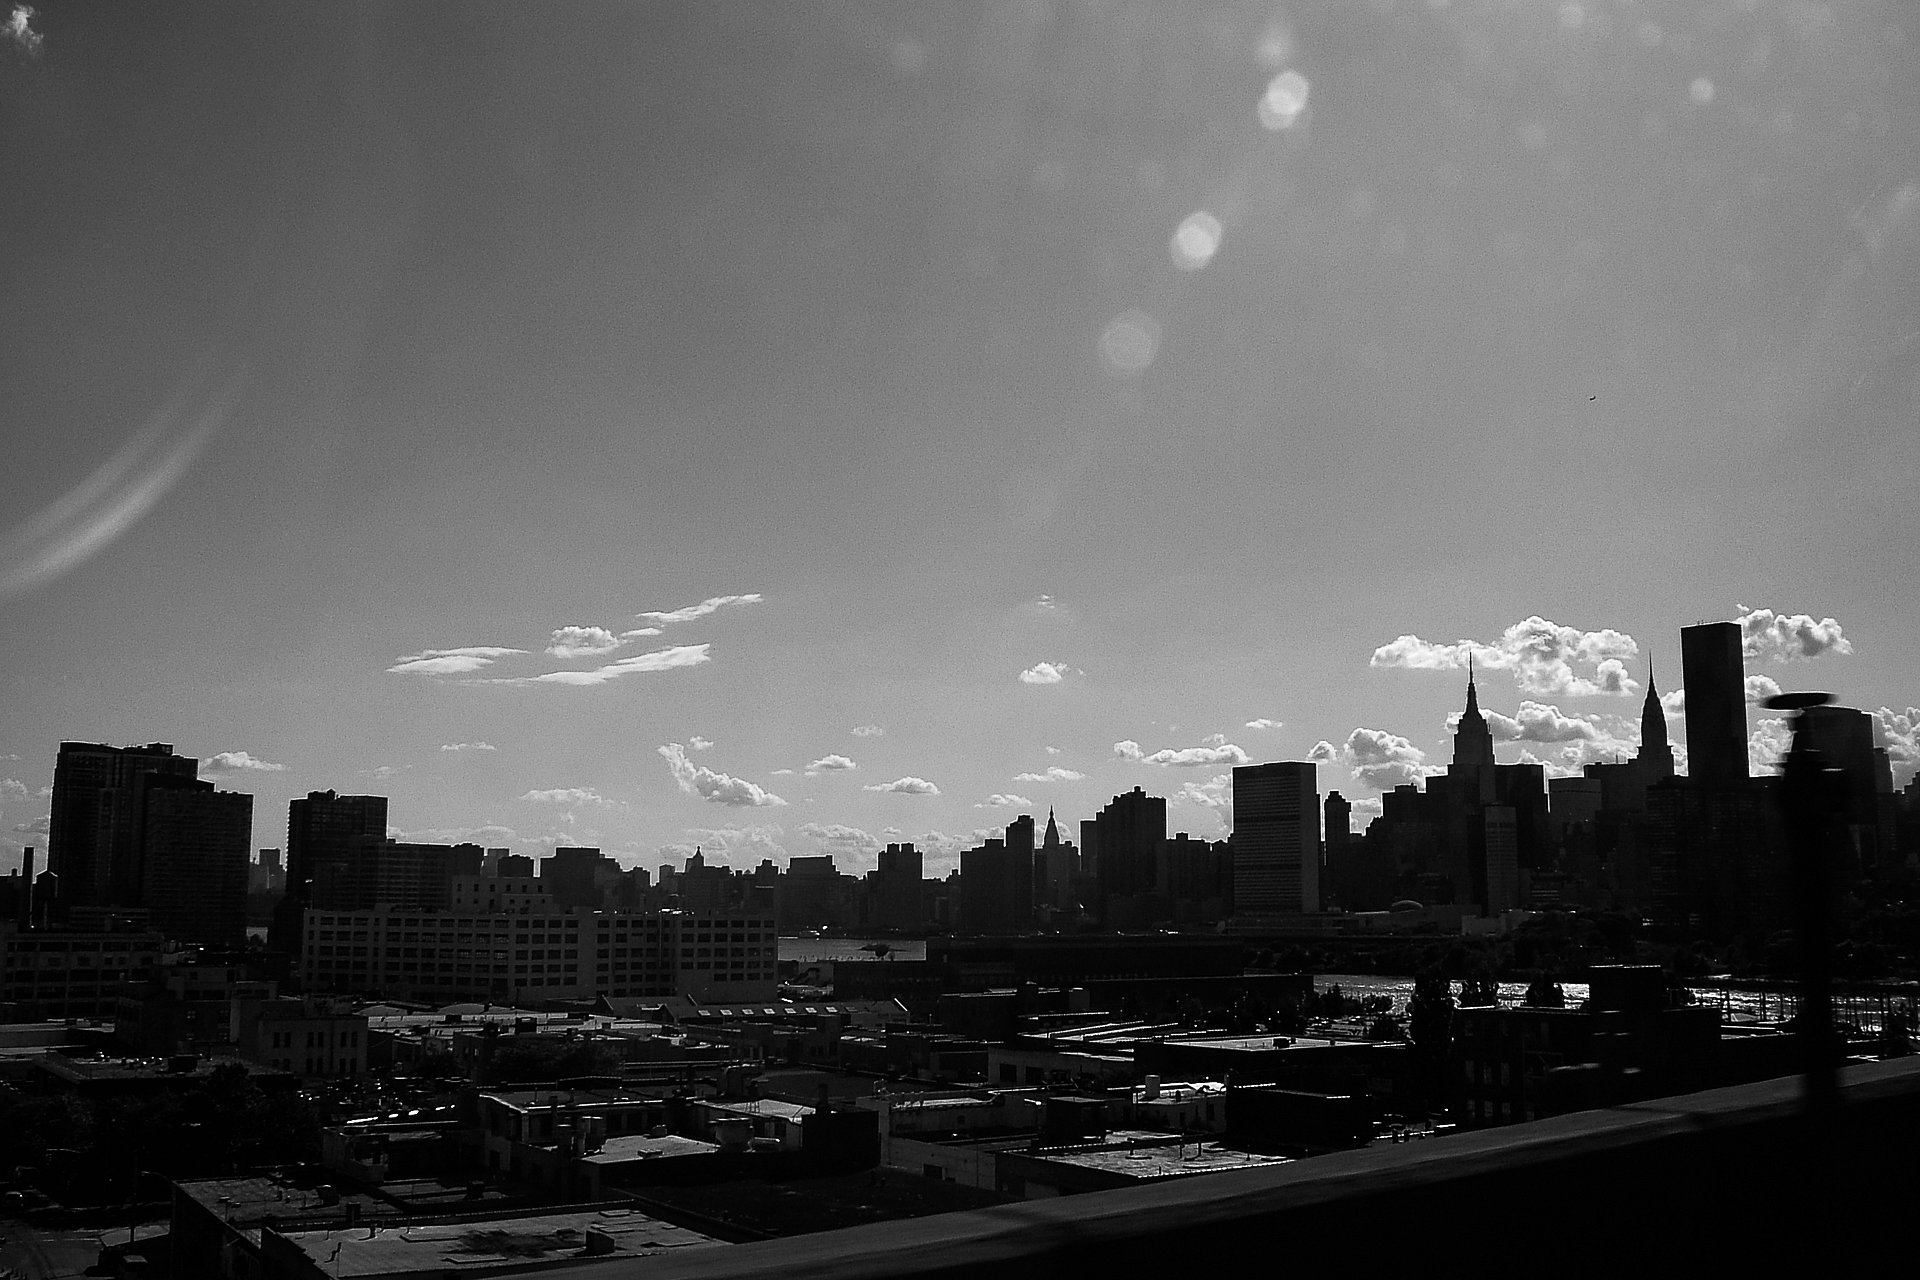 City that never sleeps - New York